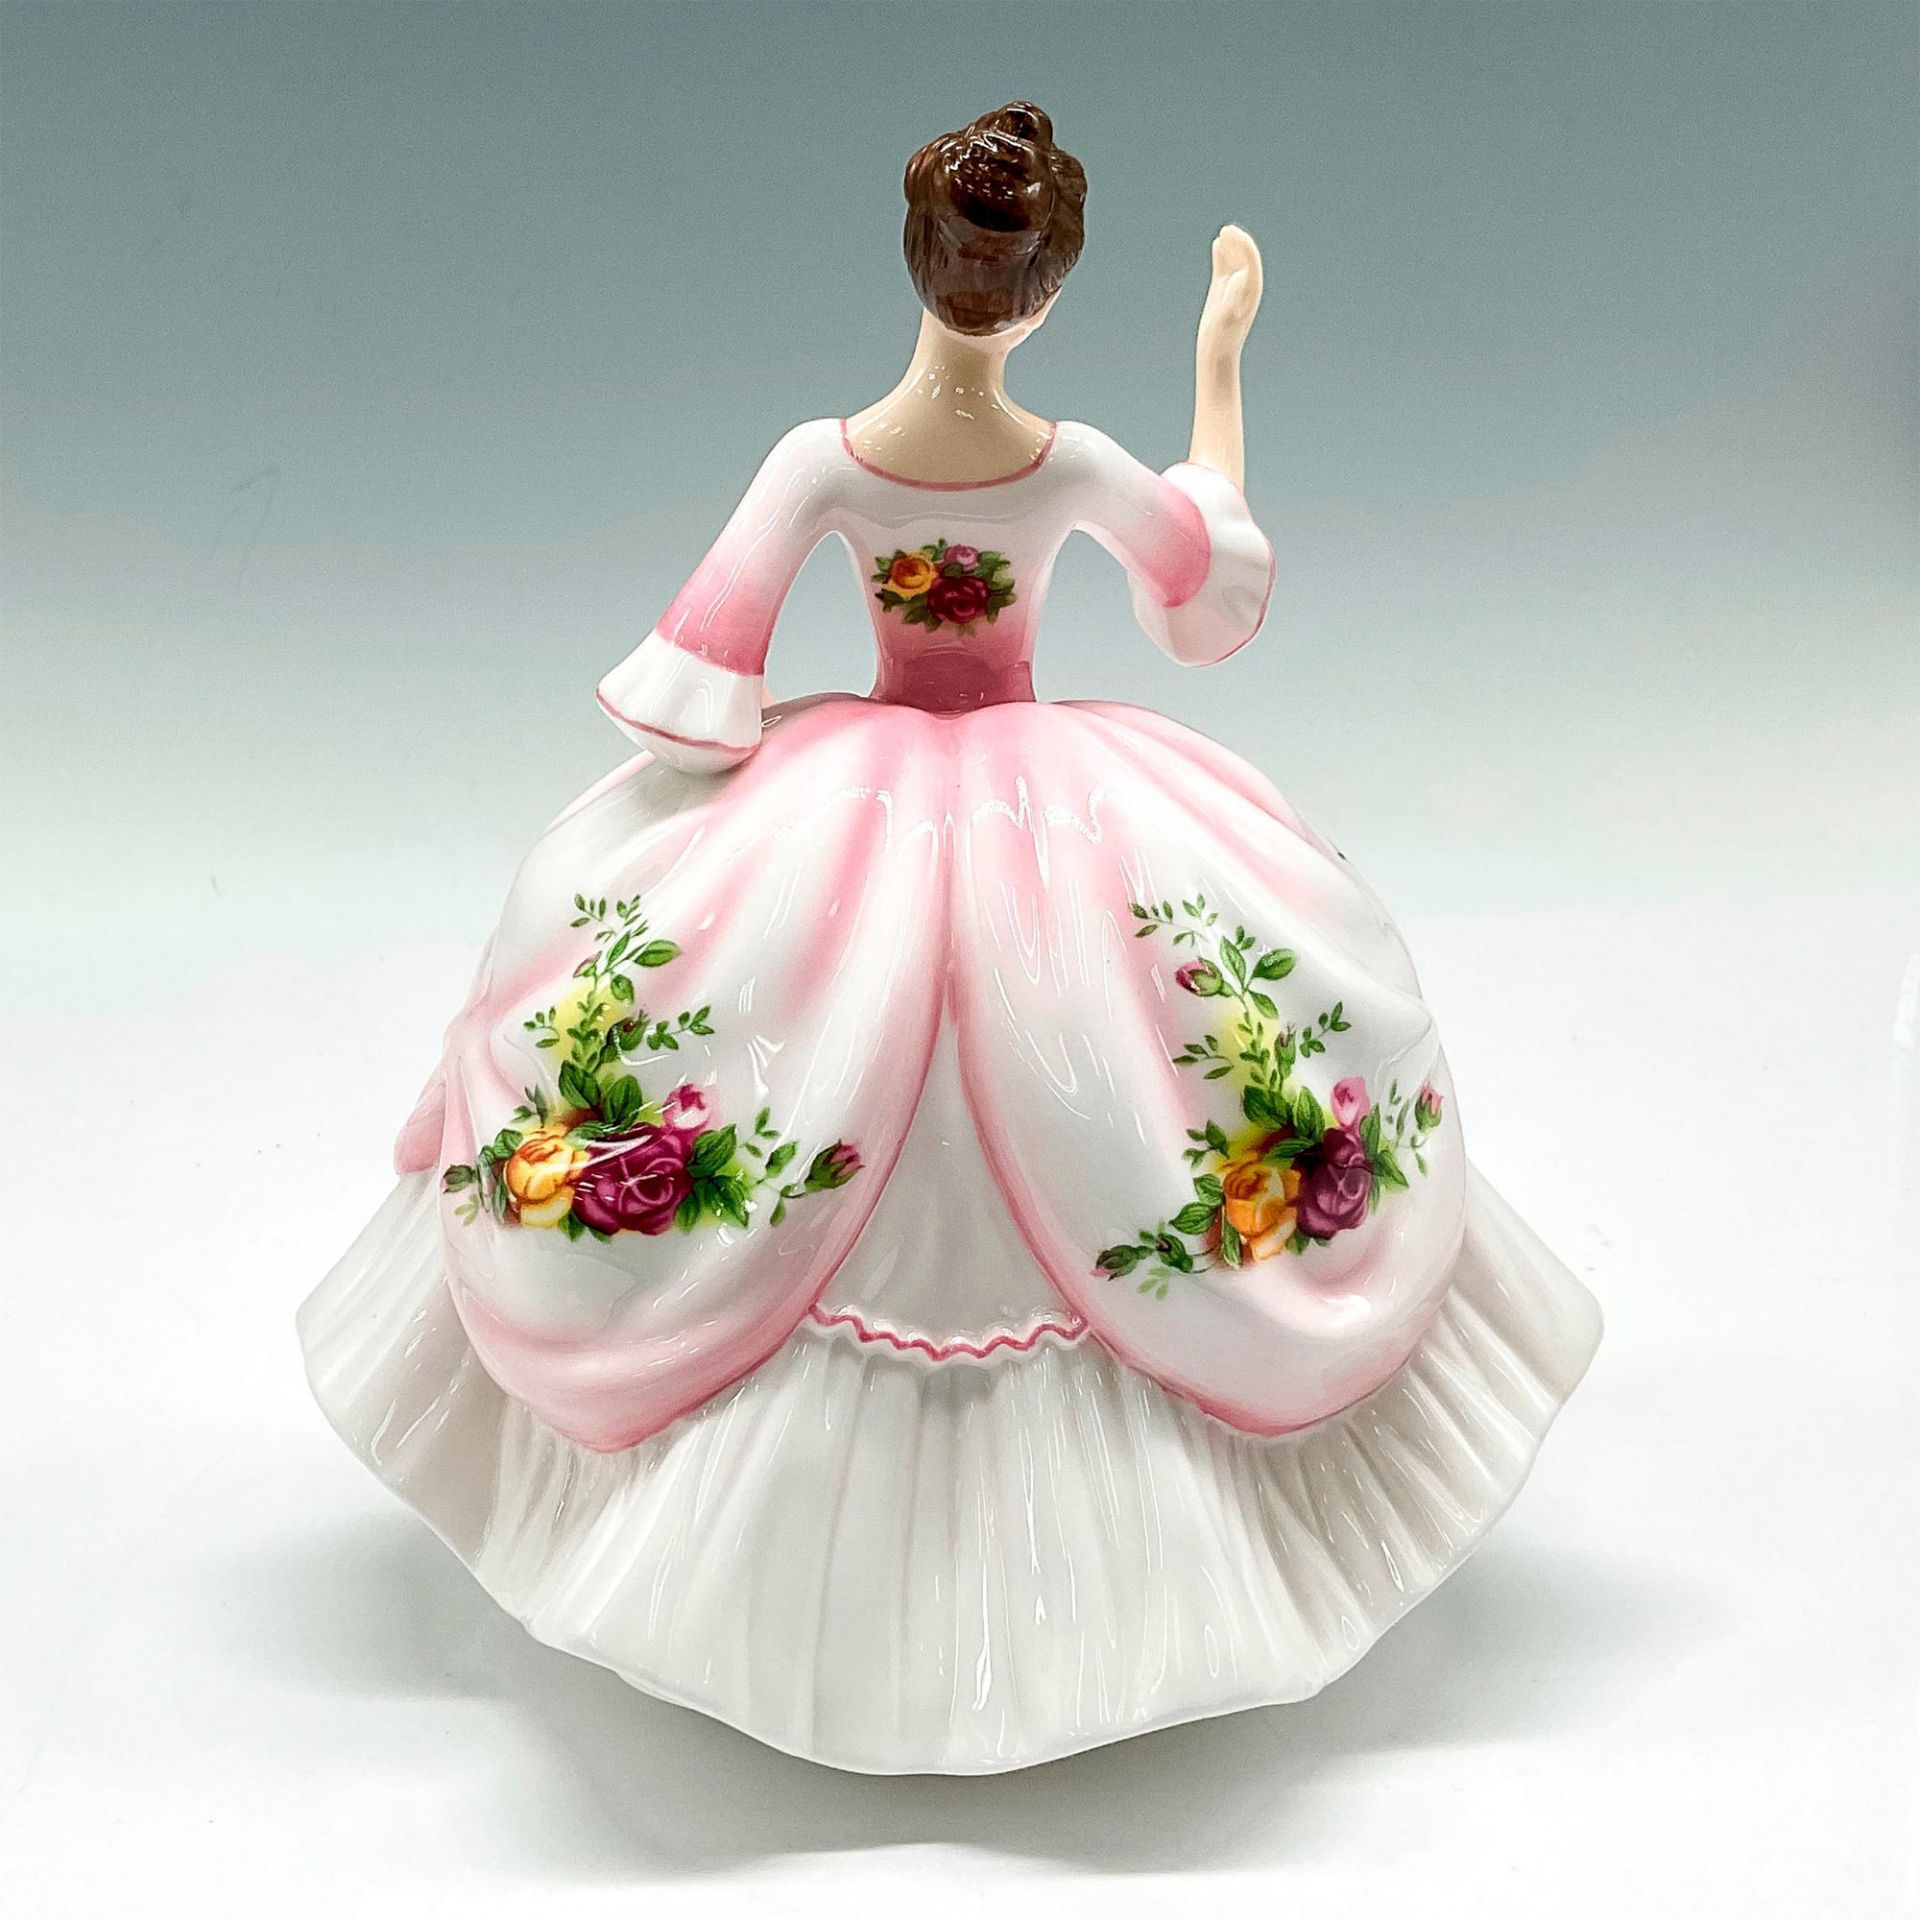 Shall We Dance - HN5026 - Royal Doulton Figurine - Image 2 of 3